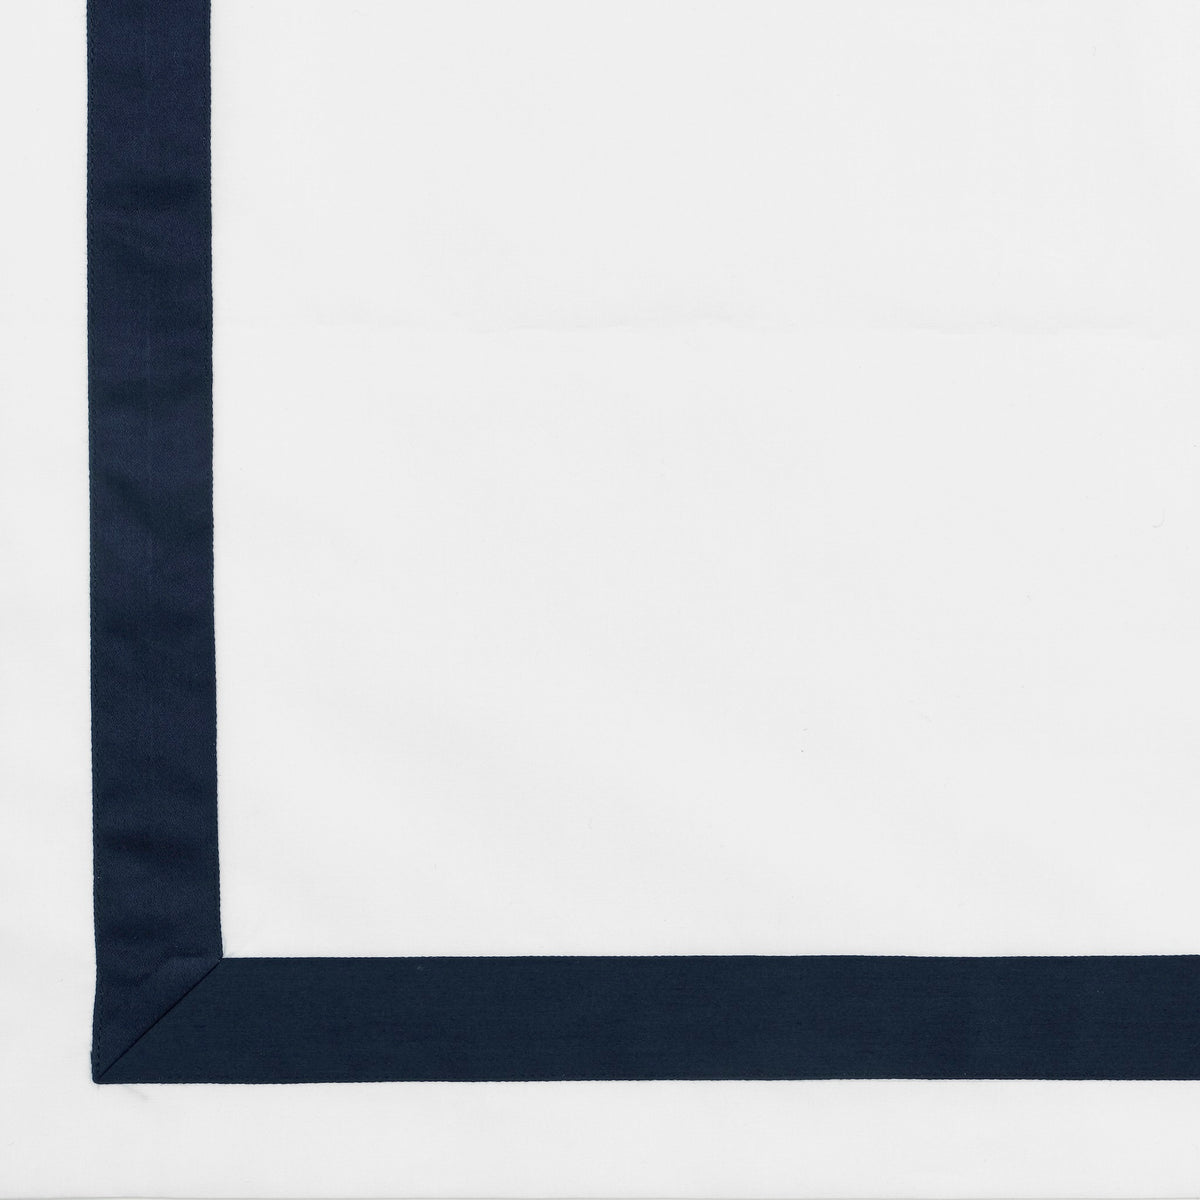 Swatch Sample of Signoria Pegaso Bedding in White/Dark Blue Color